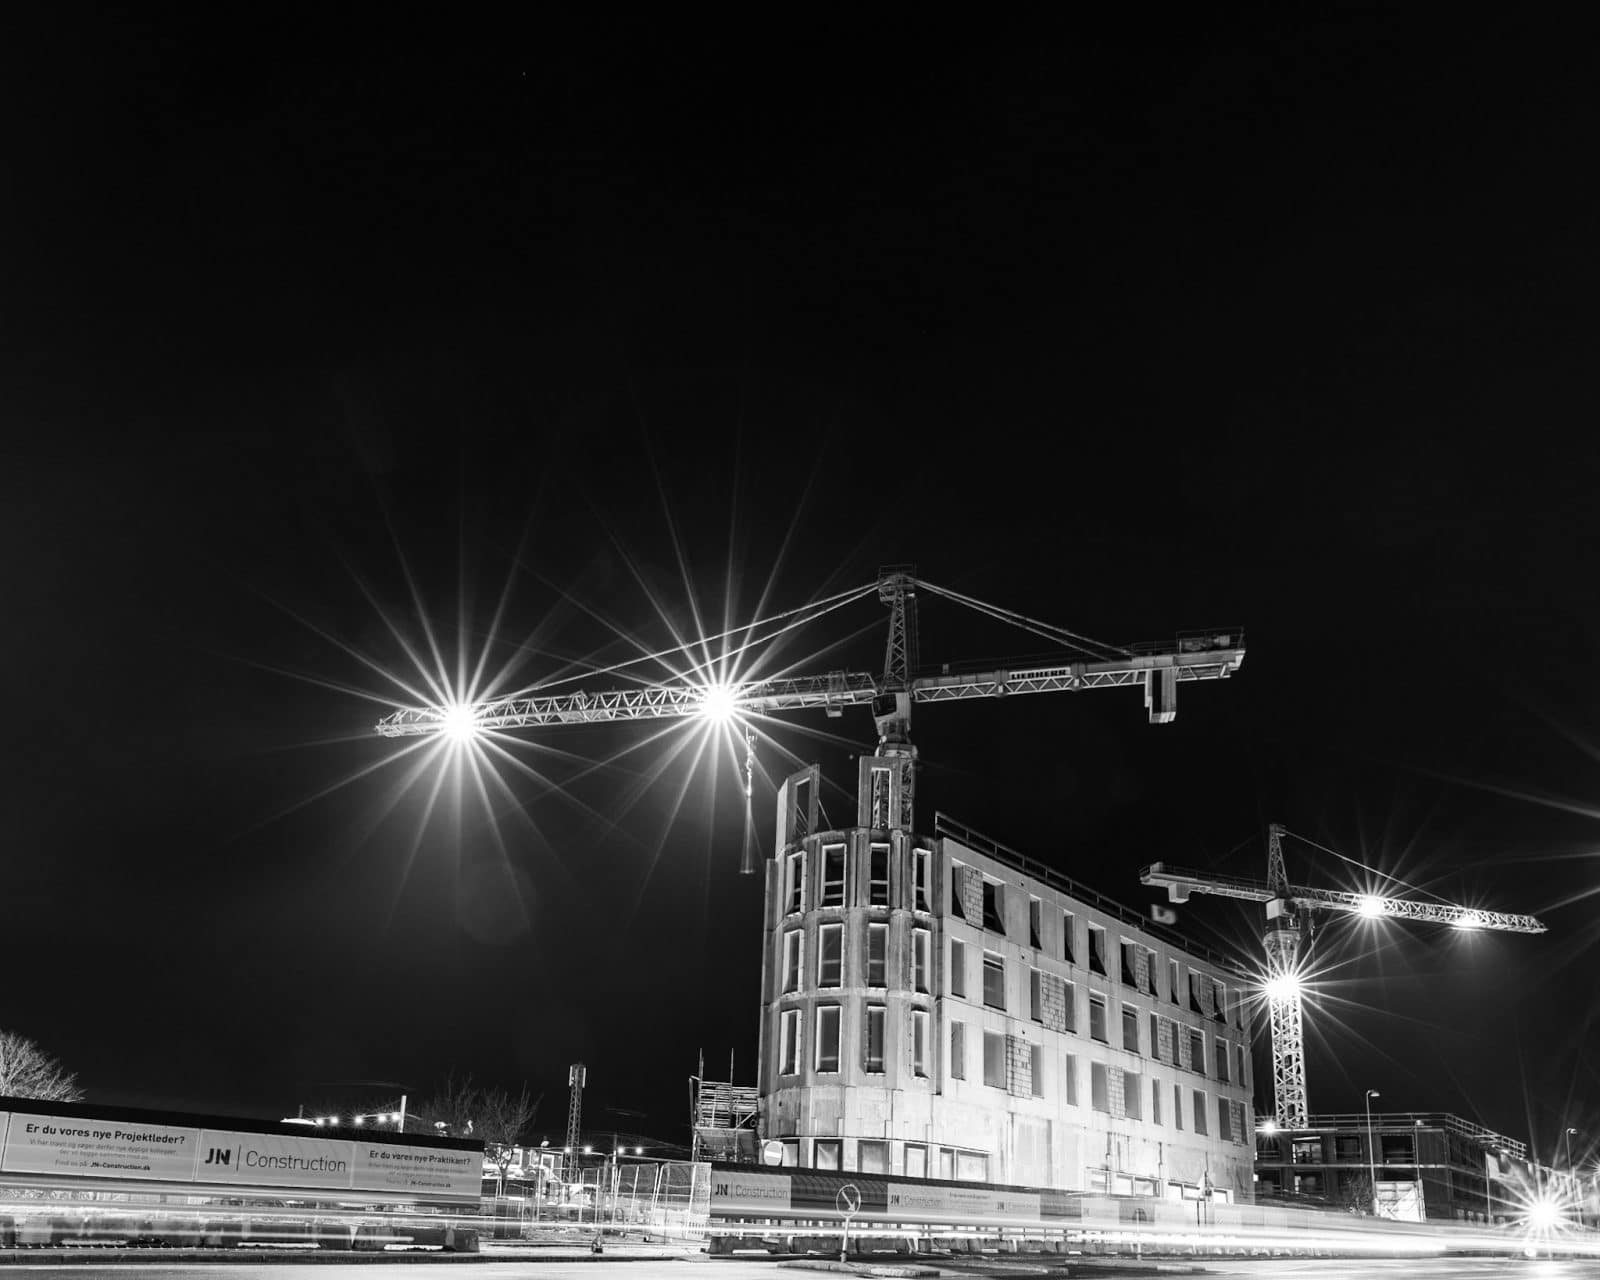 Construction site at Carlsbergvej in HIllerød, Denmark by JN Construction.